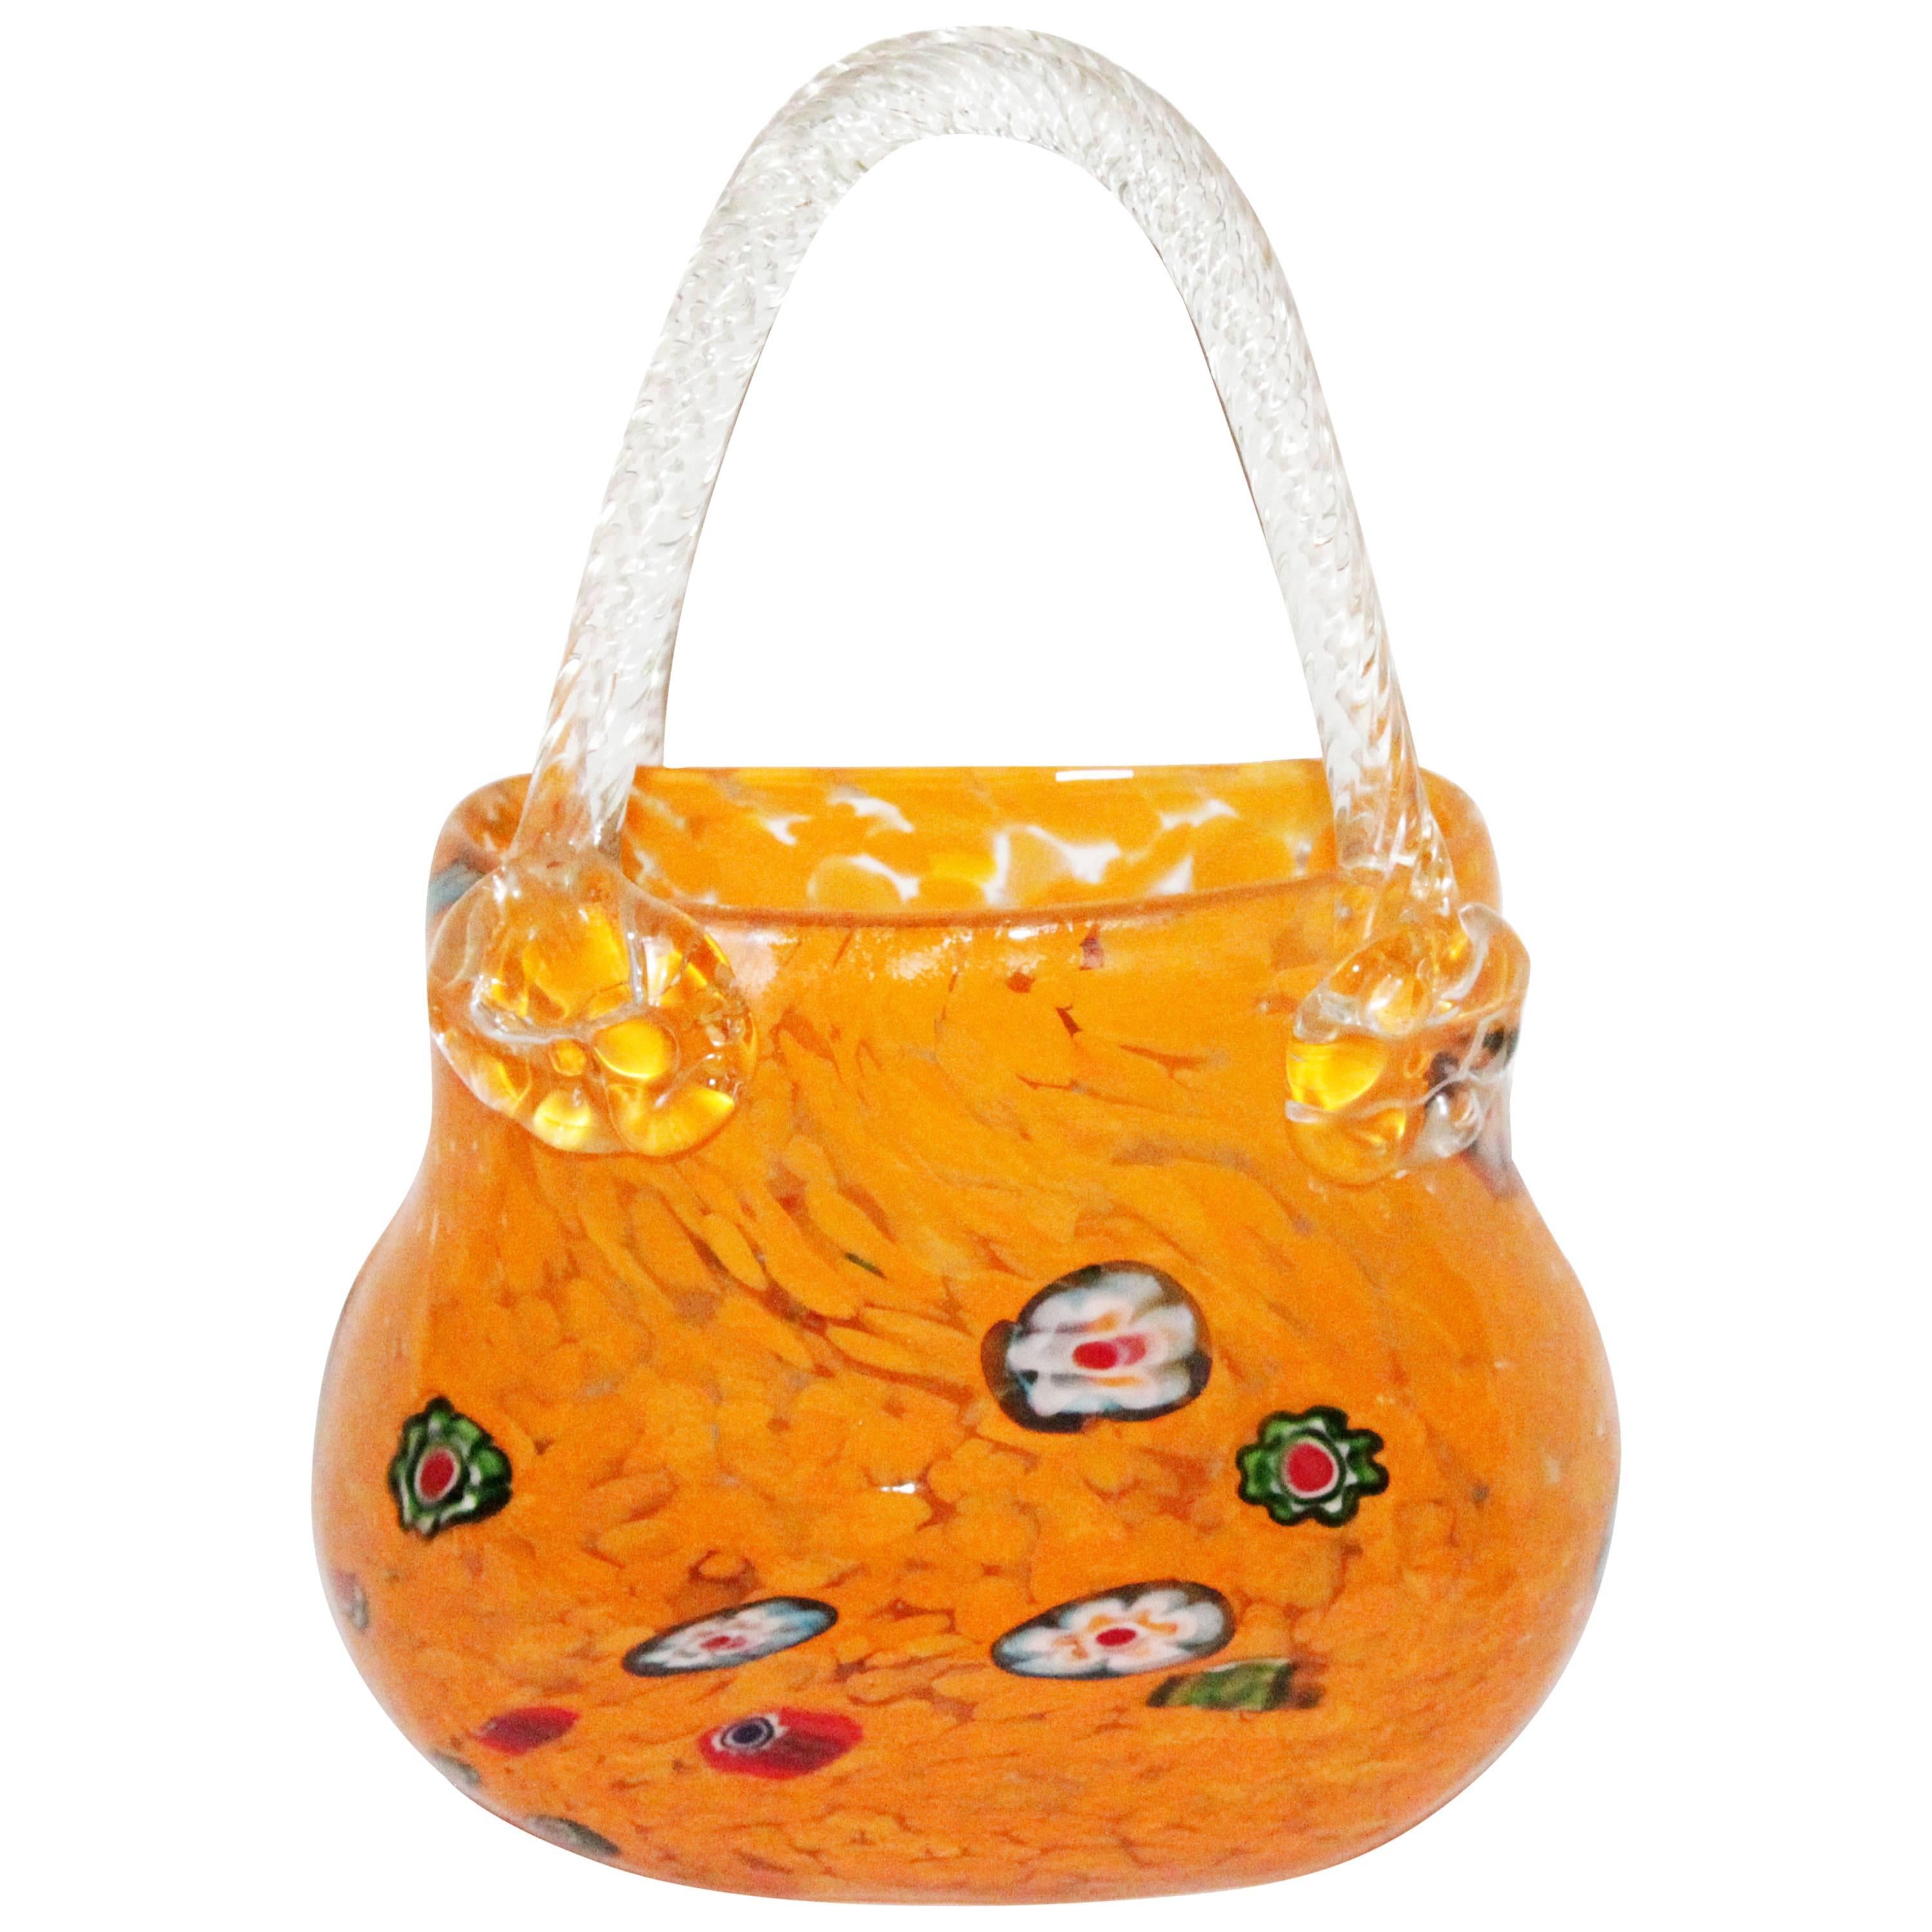 Unique Millefiori Murano "Vase" Handbag, circa 1960